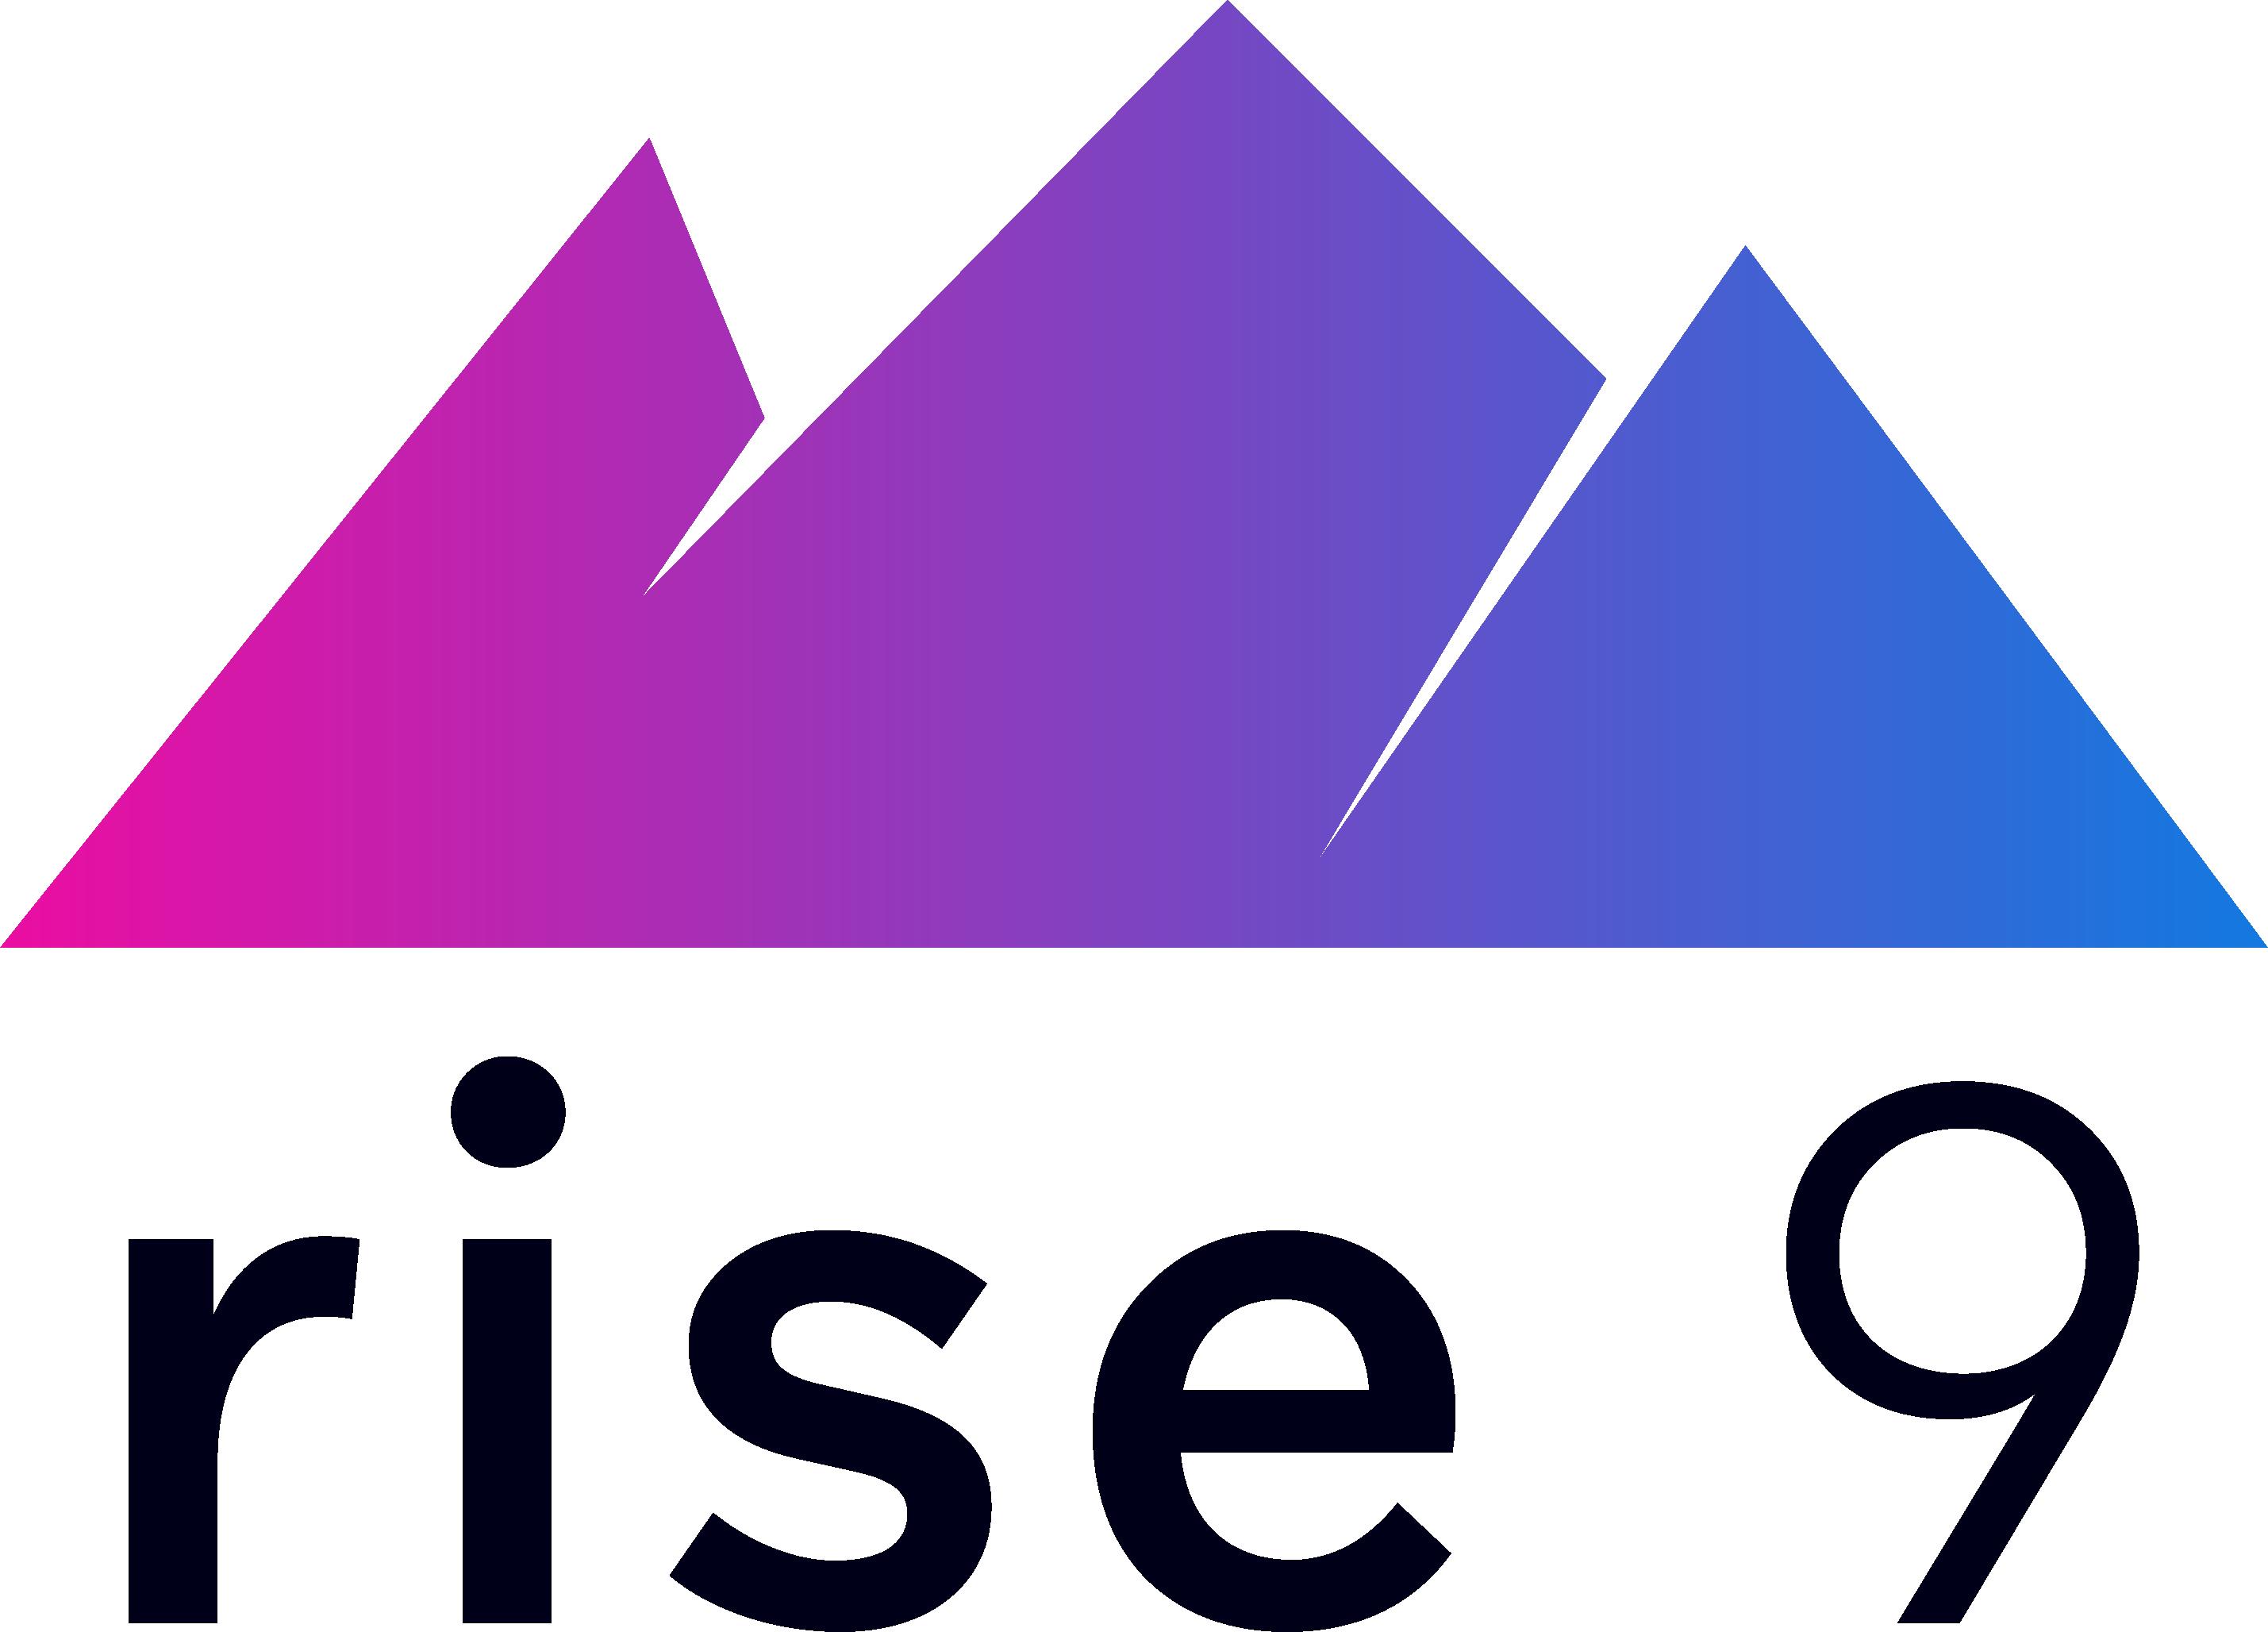 rise 9